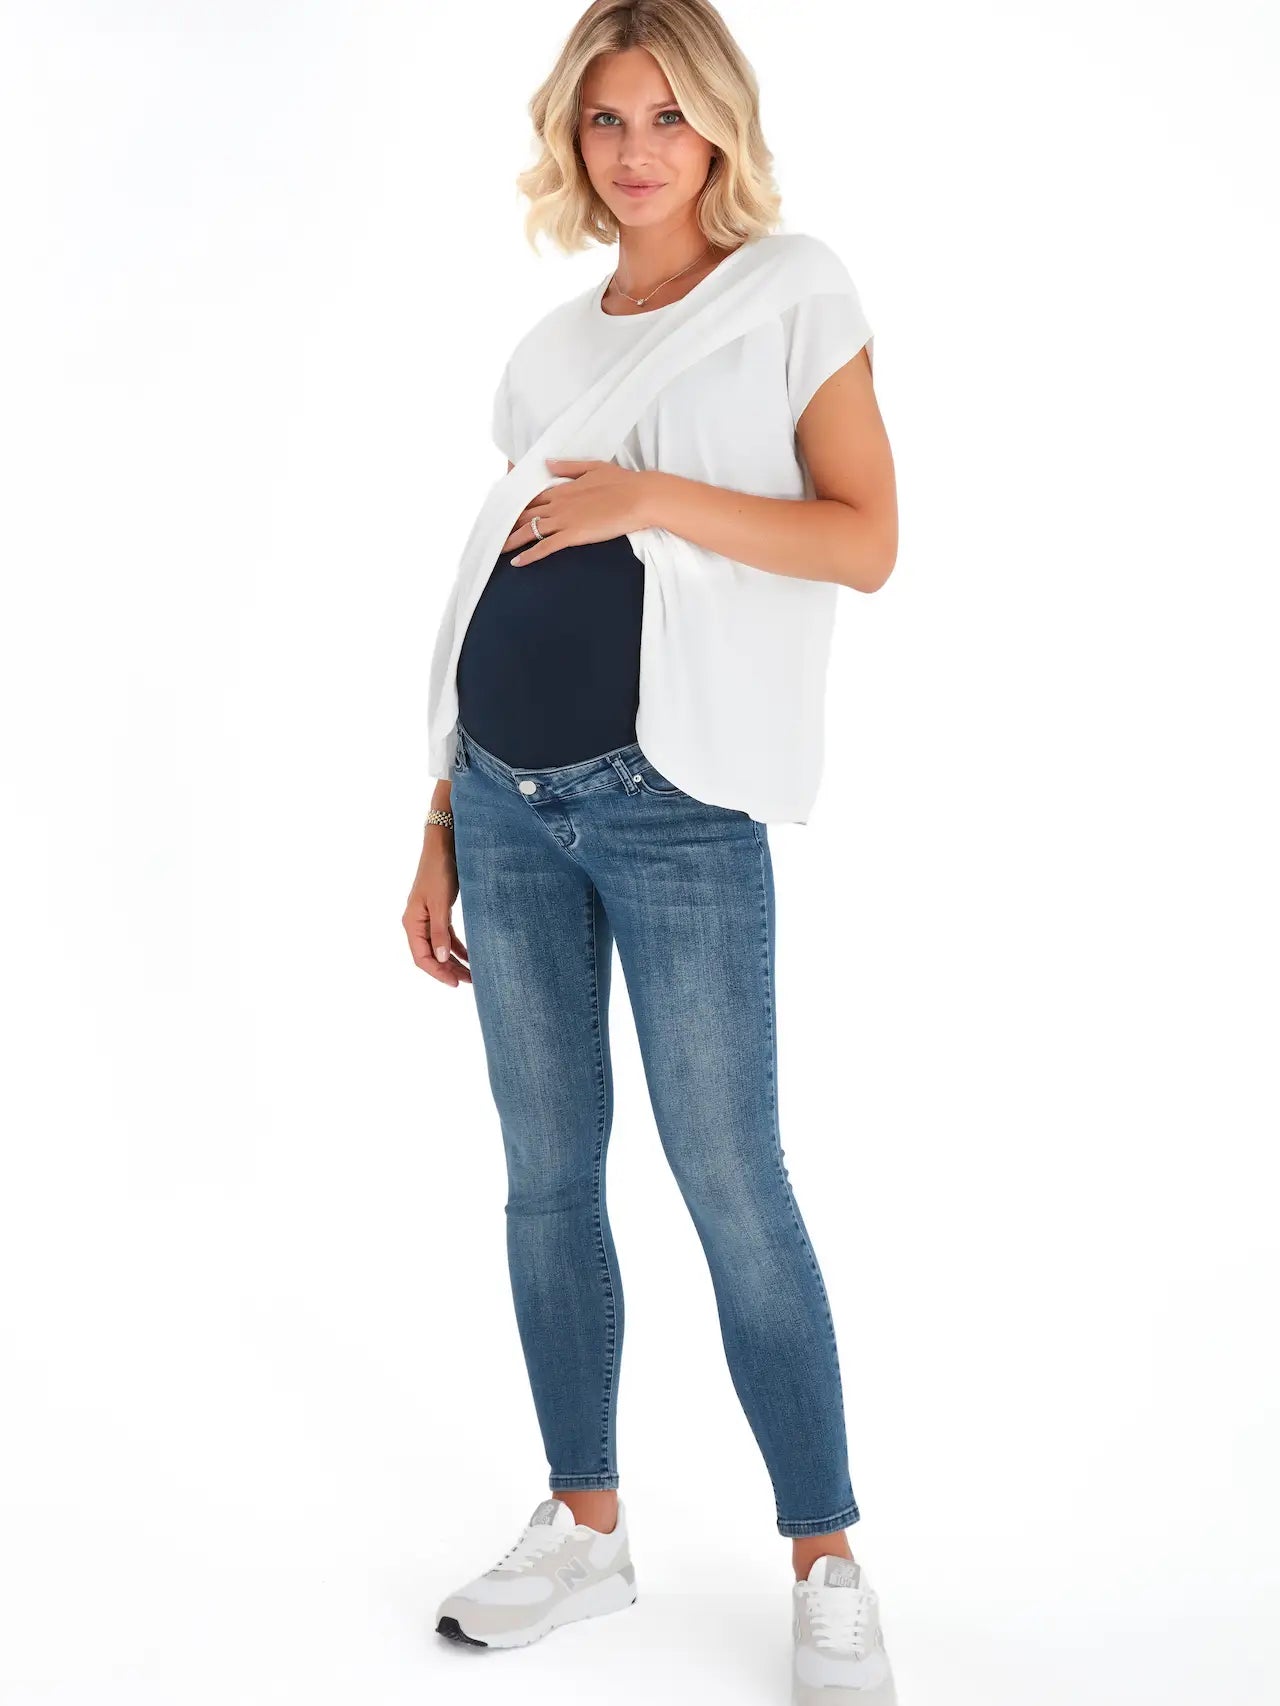 Skinny Maternity Jeans